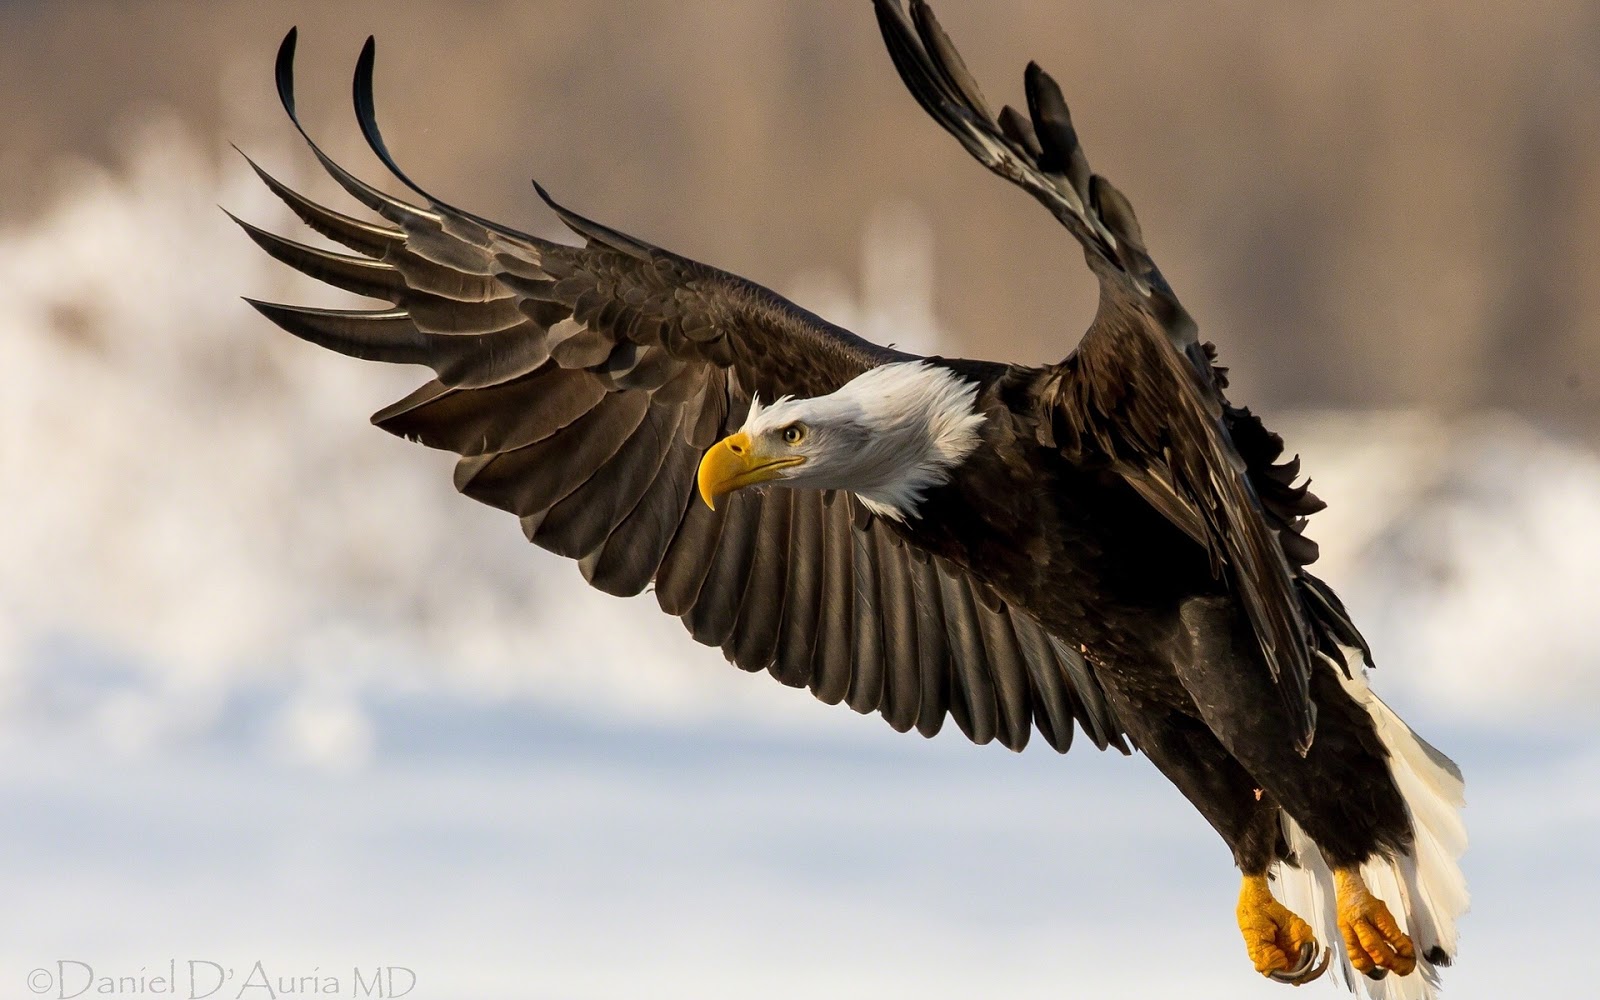 Beautiful Wallpaper Eagle